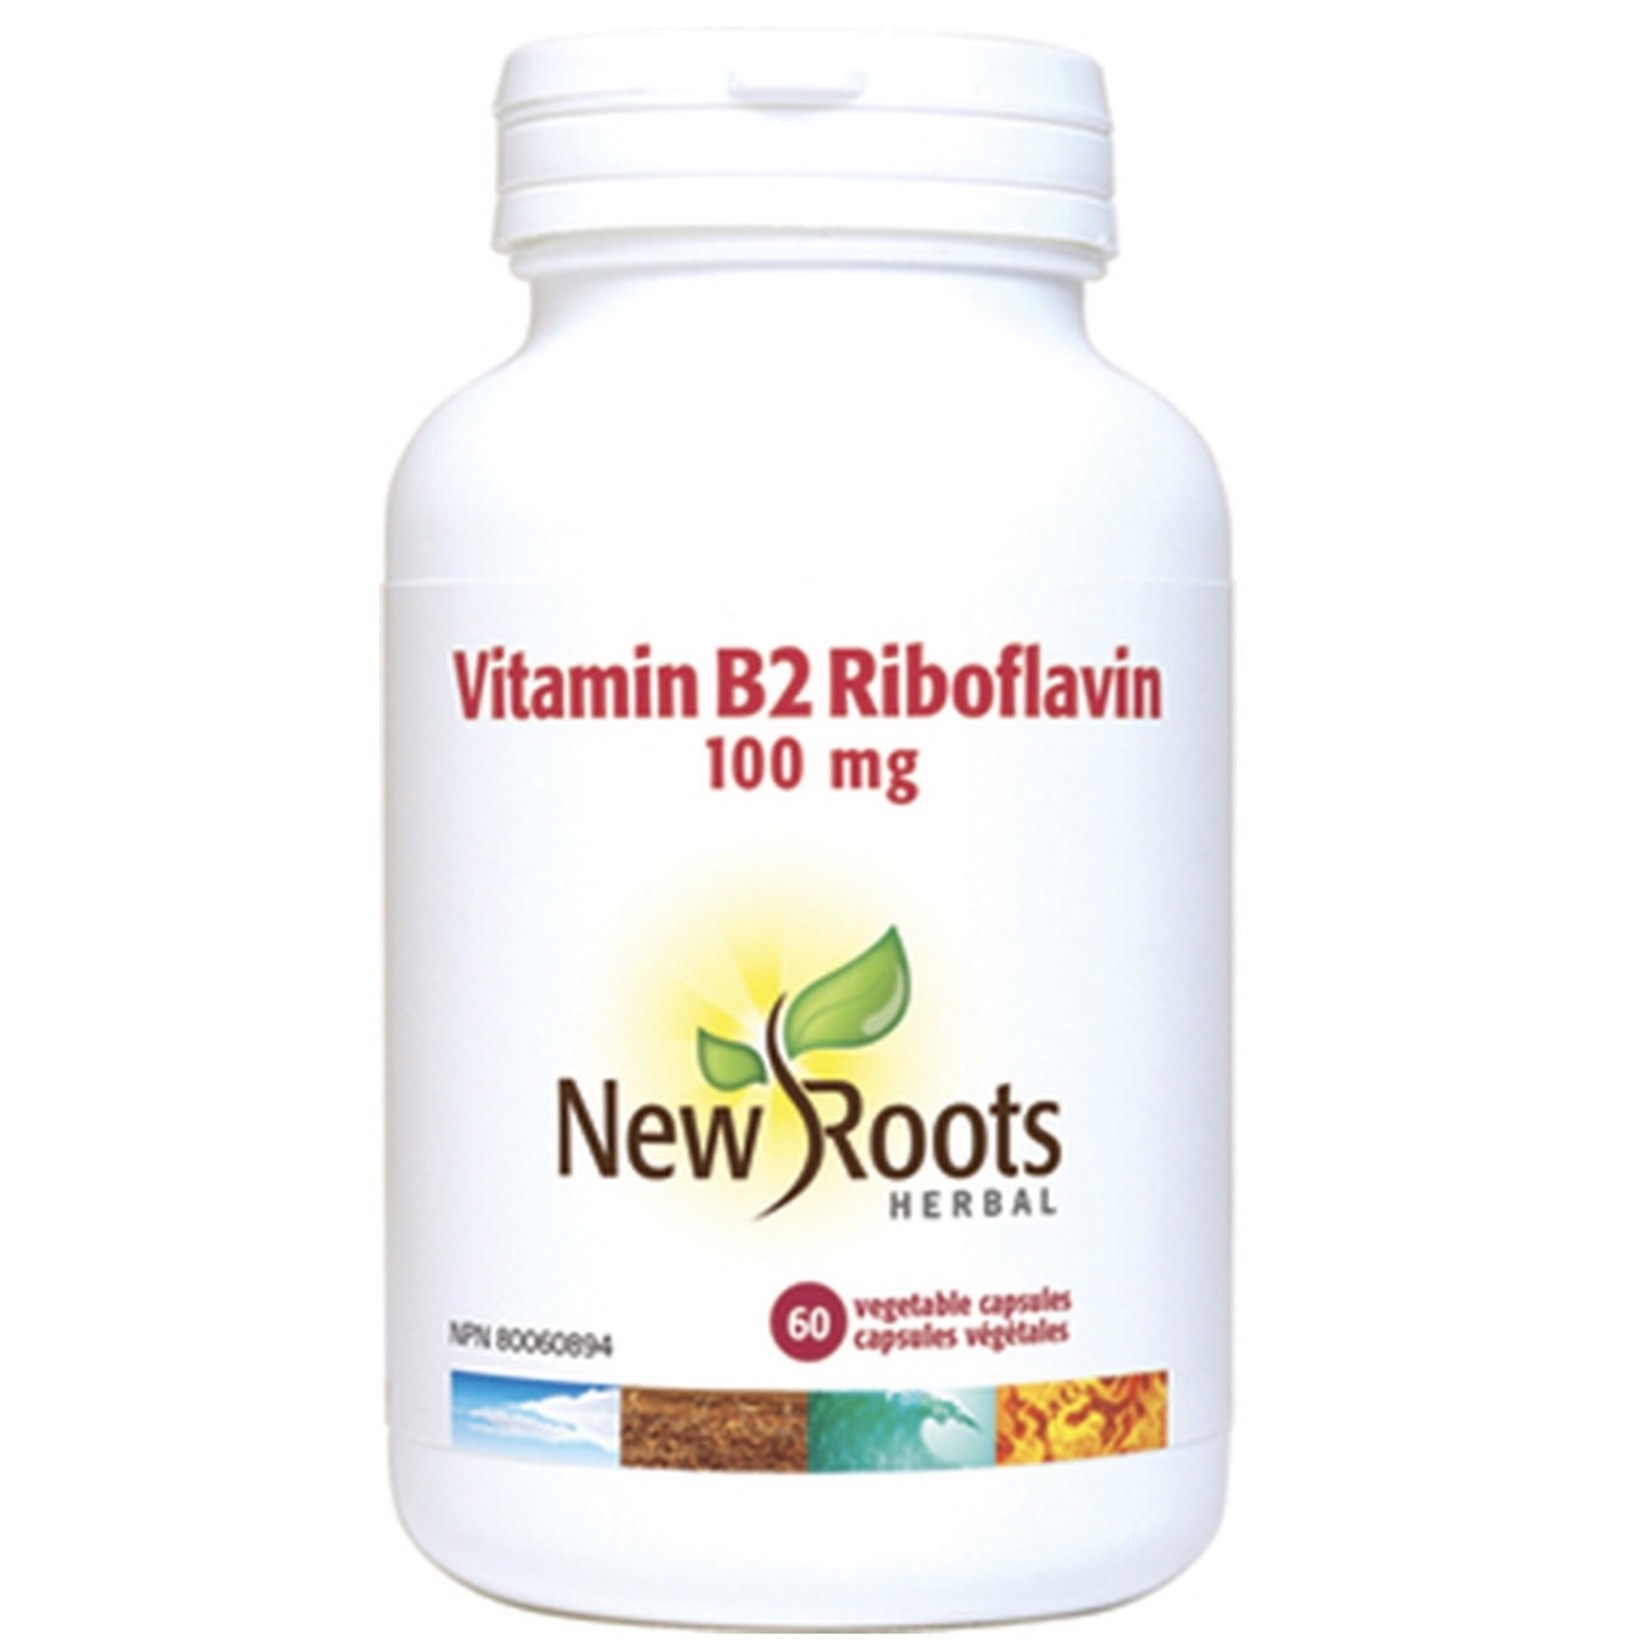 New Roots New Roots Vitamin B2 Riboflavin 100mg 60caps